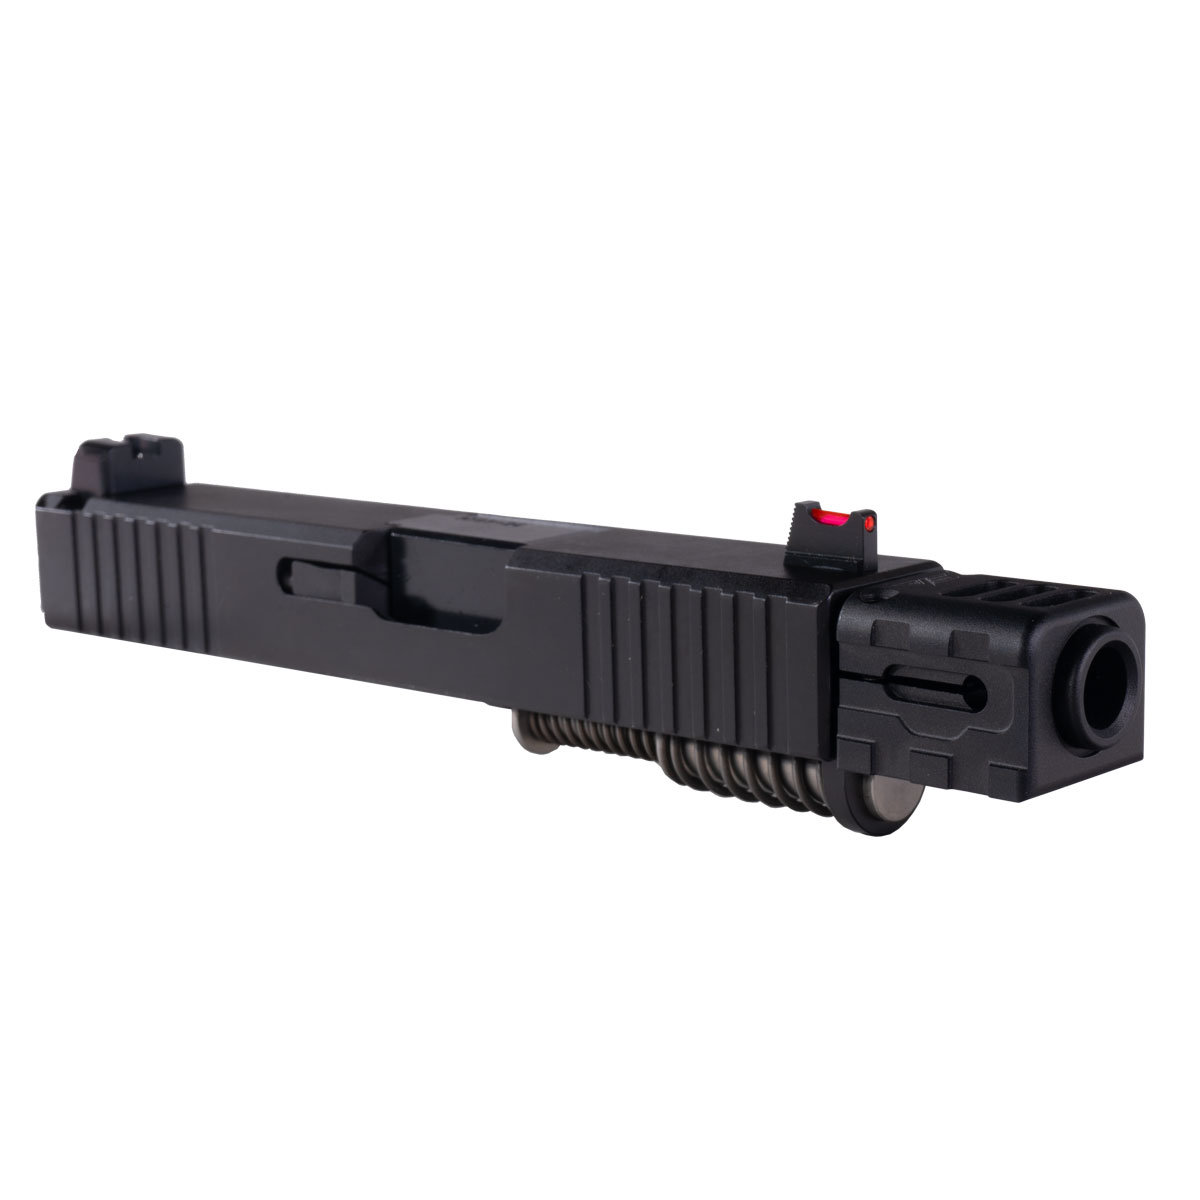 DDS 'Simum w/ Sylvan Arms Compensator' 9mm Complete Slide Kit - Glock 26 Gen 1-2 Compatible